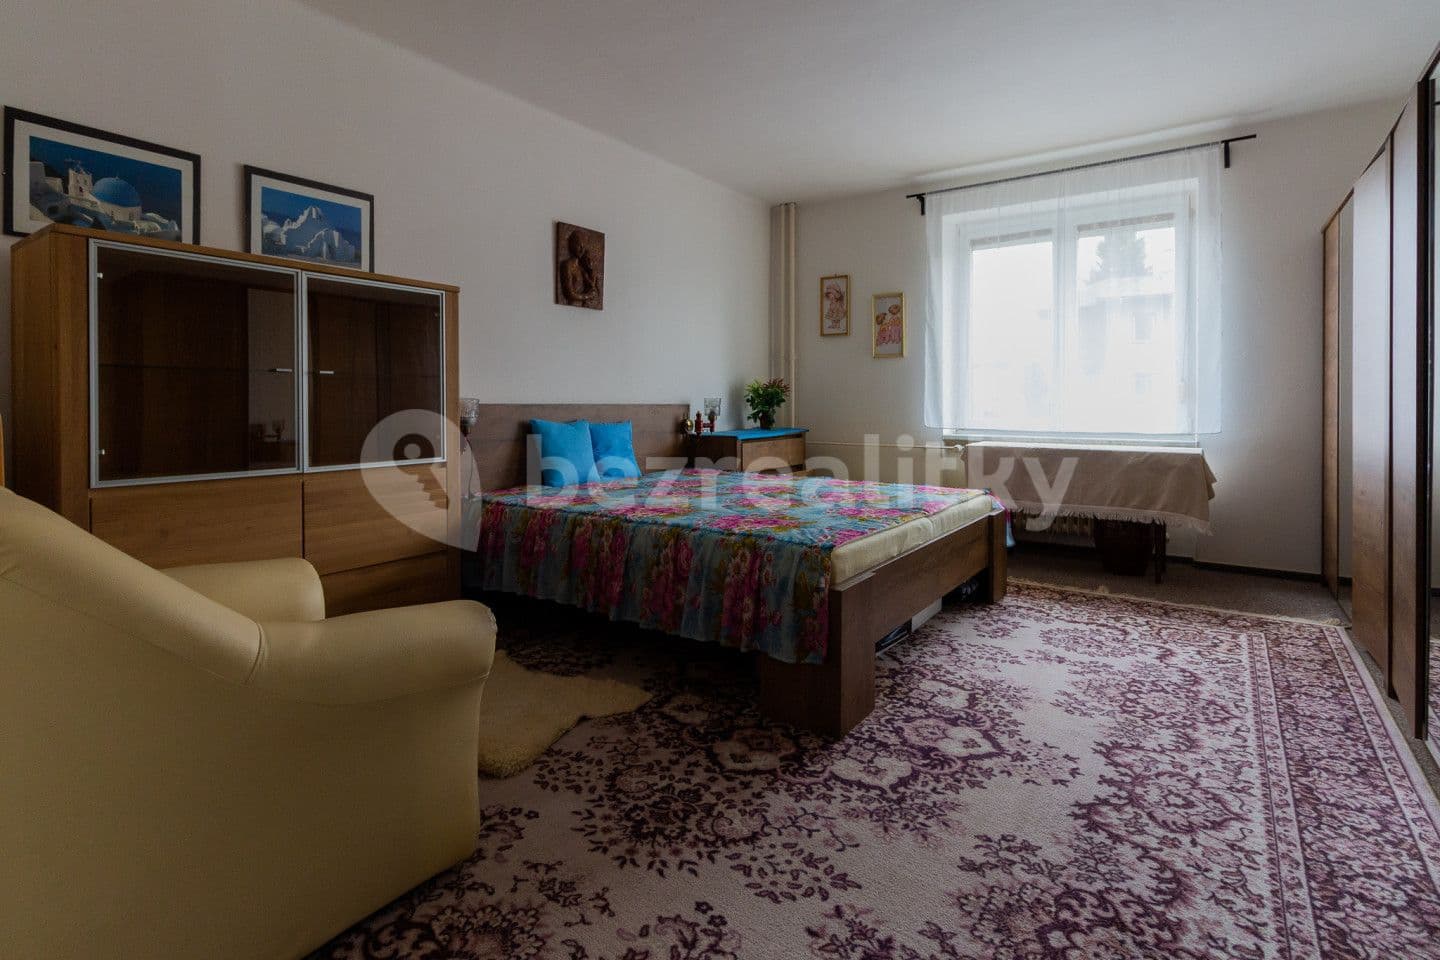 3 bedroom with open-plan kitchen flat for sale, 72 m², Jesenická, Šumperk, Olomoucký Region